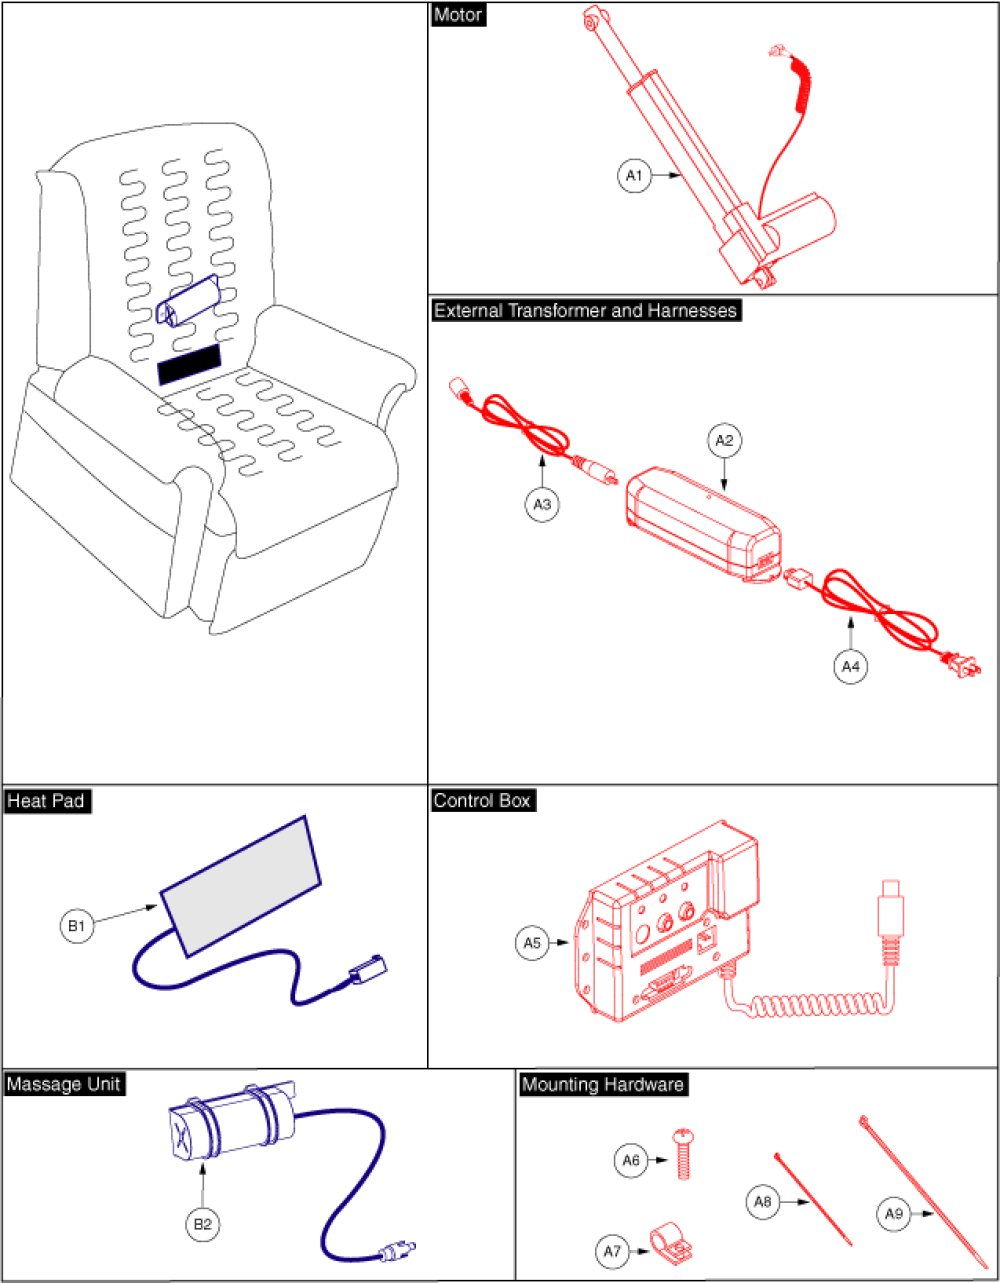 Motor Assembly - Wallhugger H&m (fbs) parts diagram